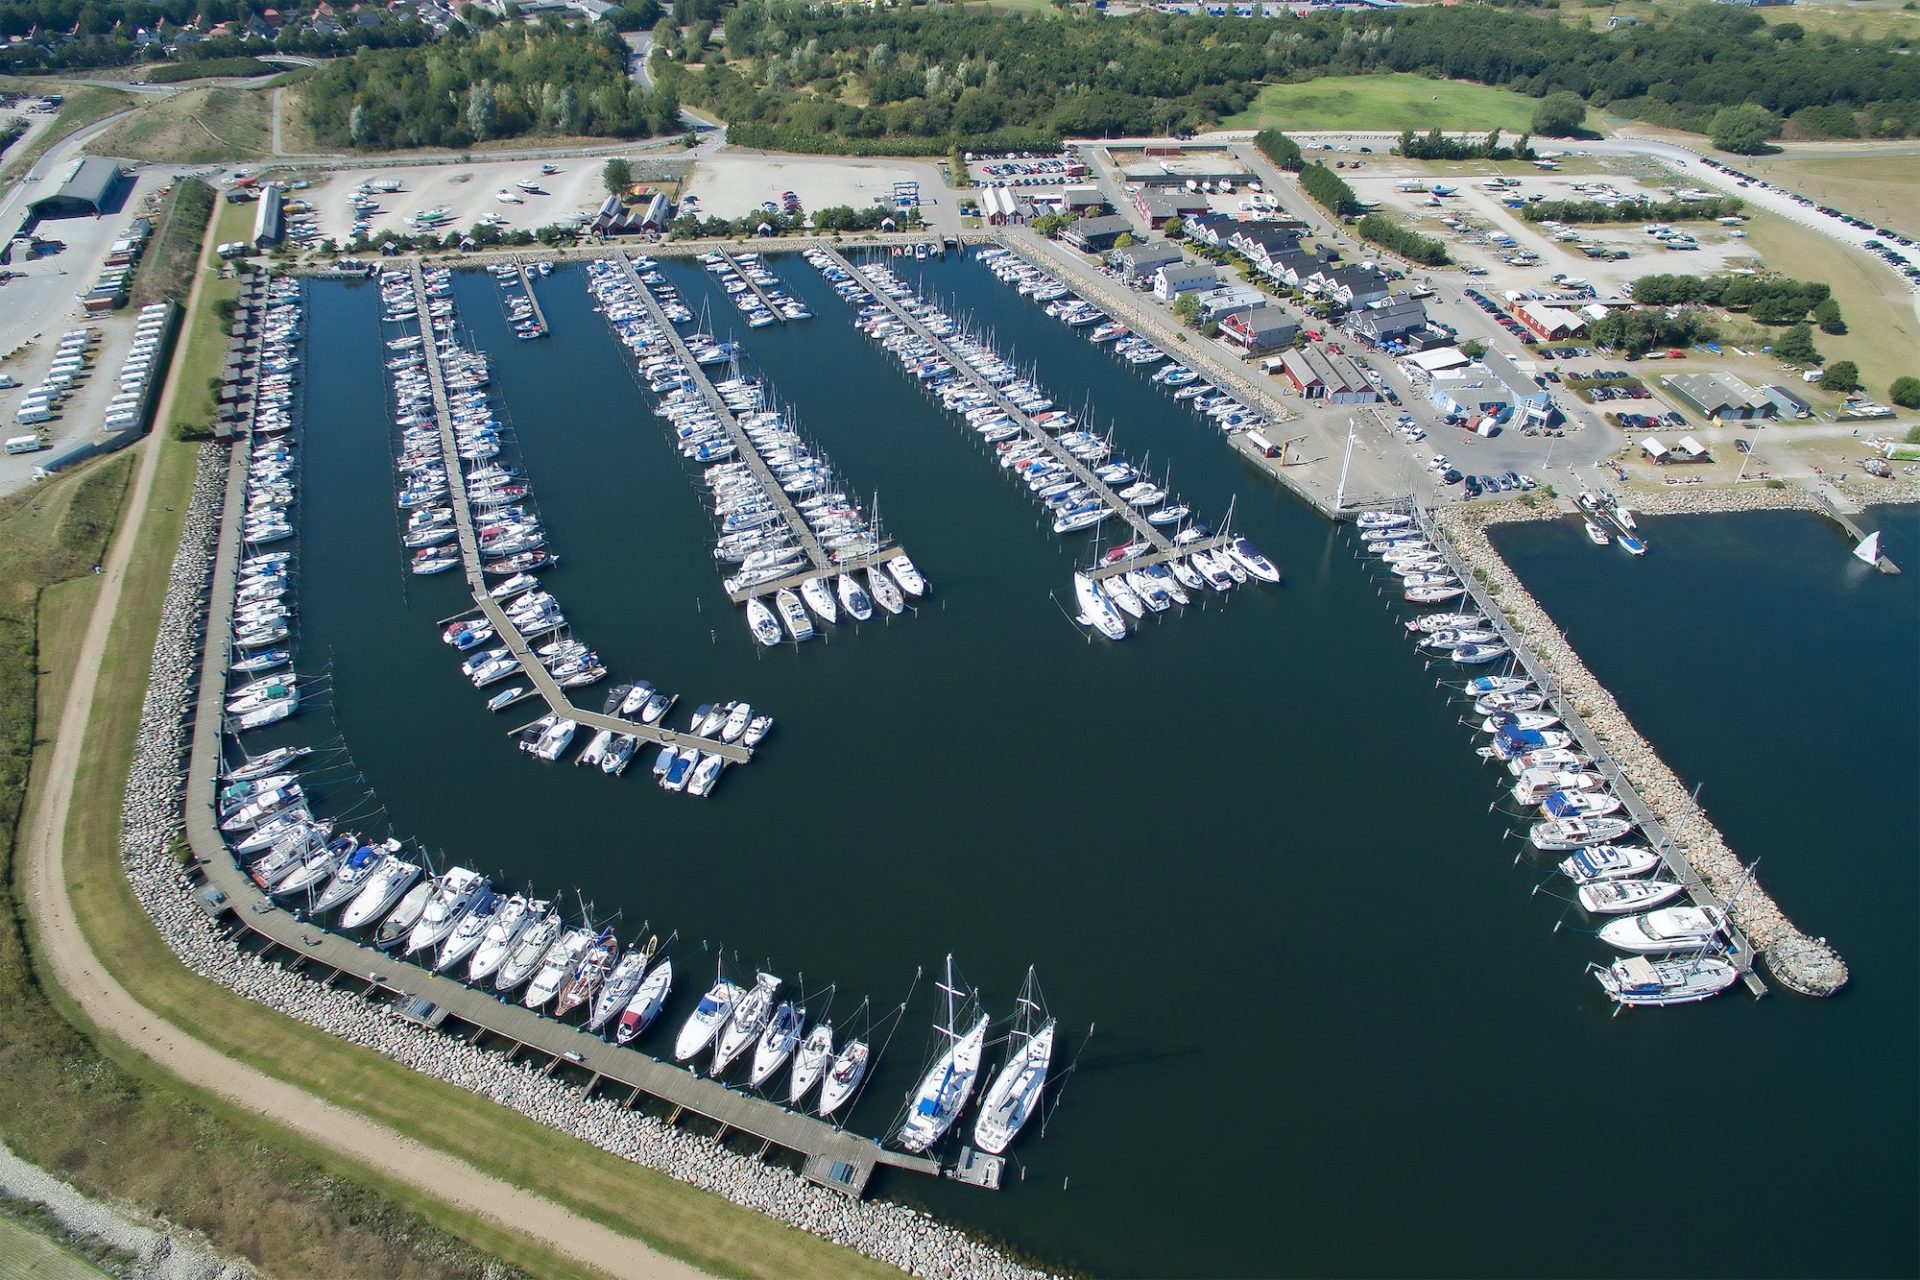 Aerial view of Koege marina, Denmark